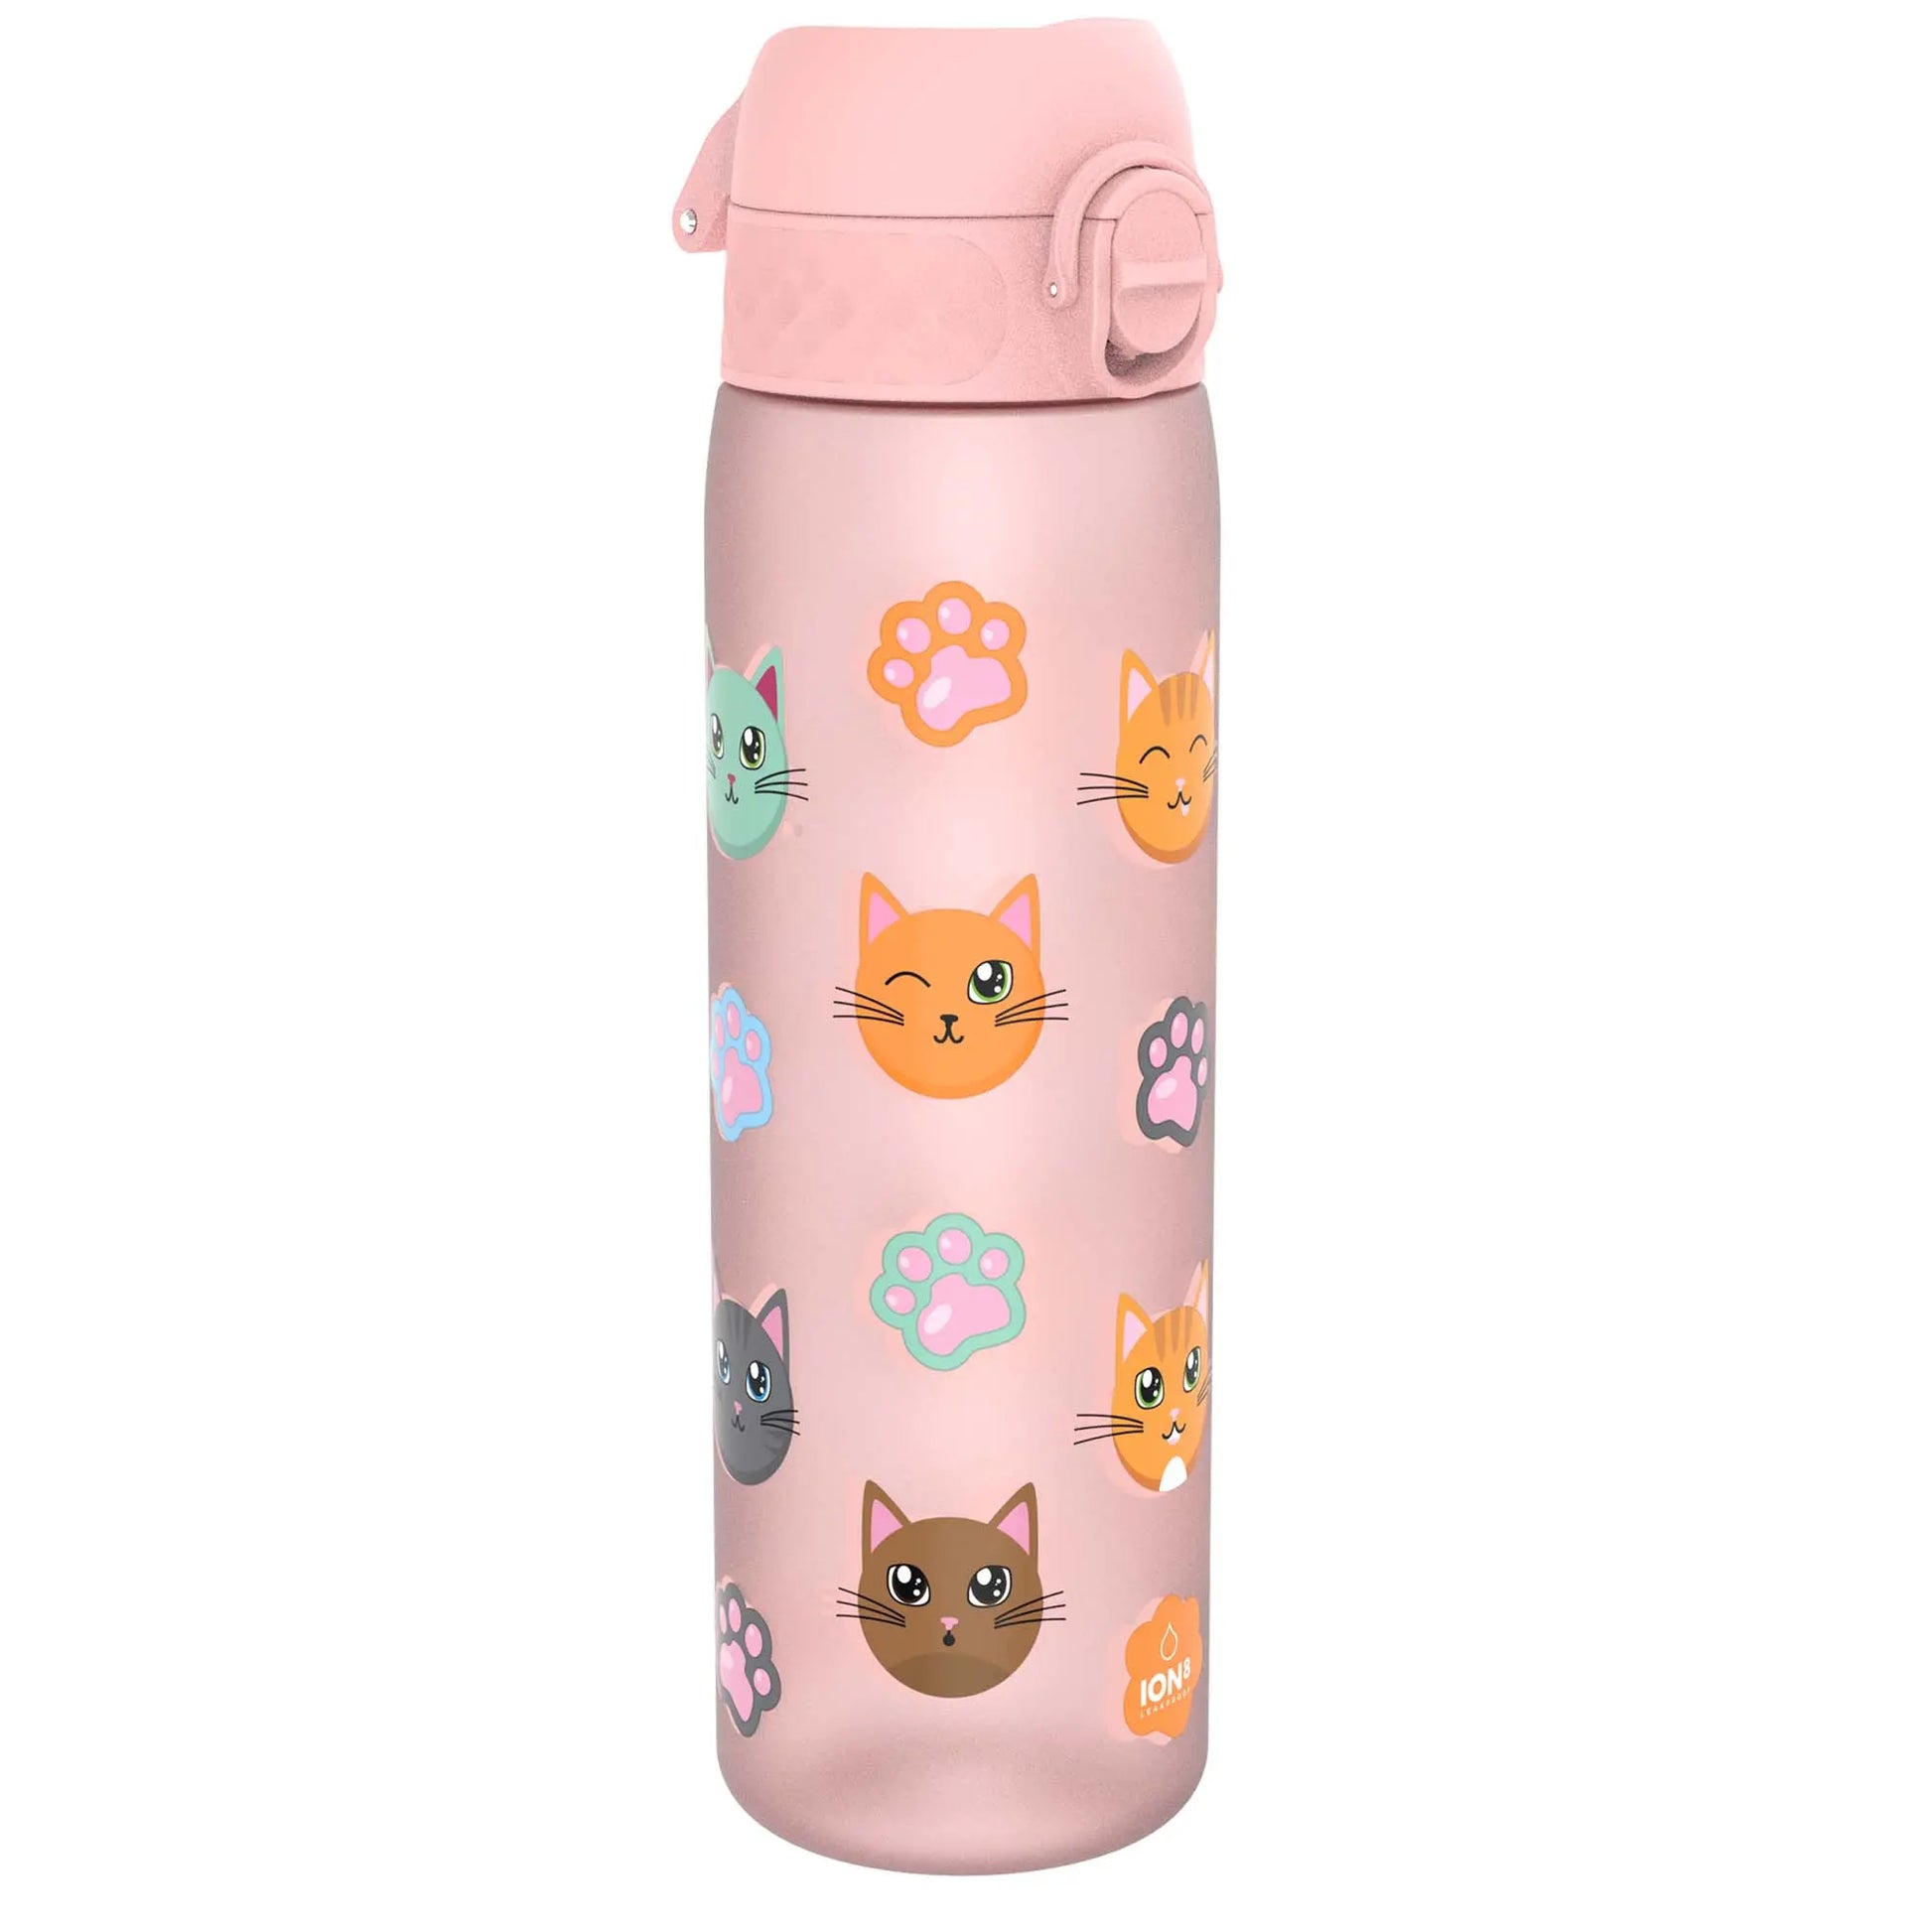 Leak Proof Slim Water Bottle, Recyclon™, Cats, 500ml (18oz) Ion8